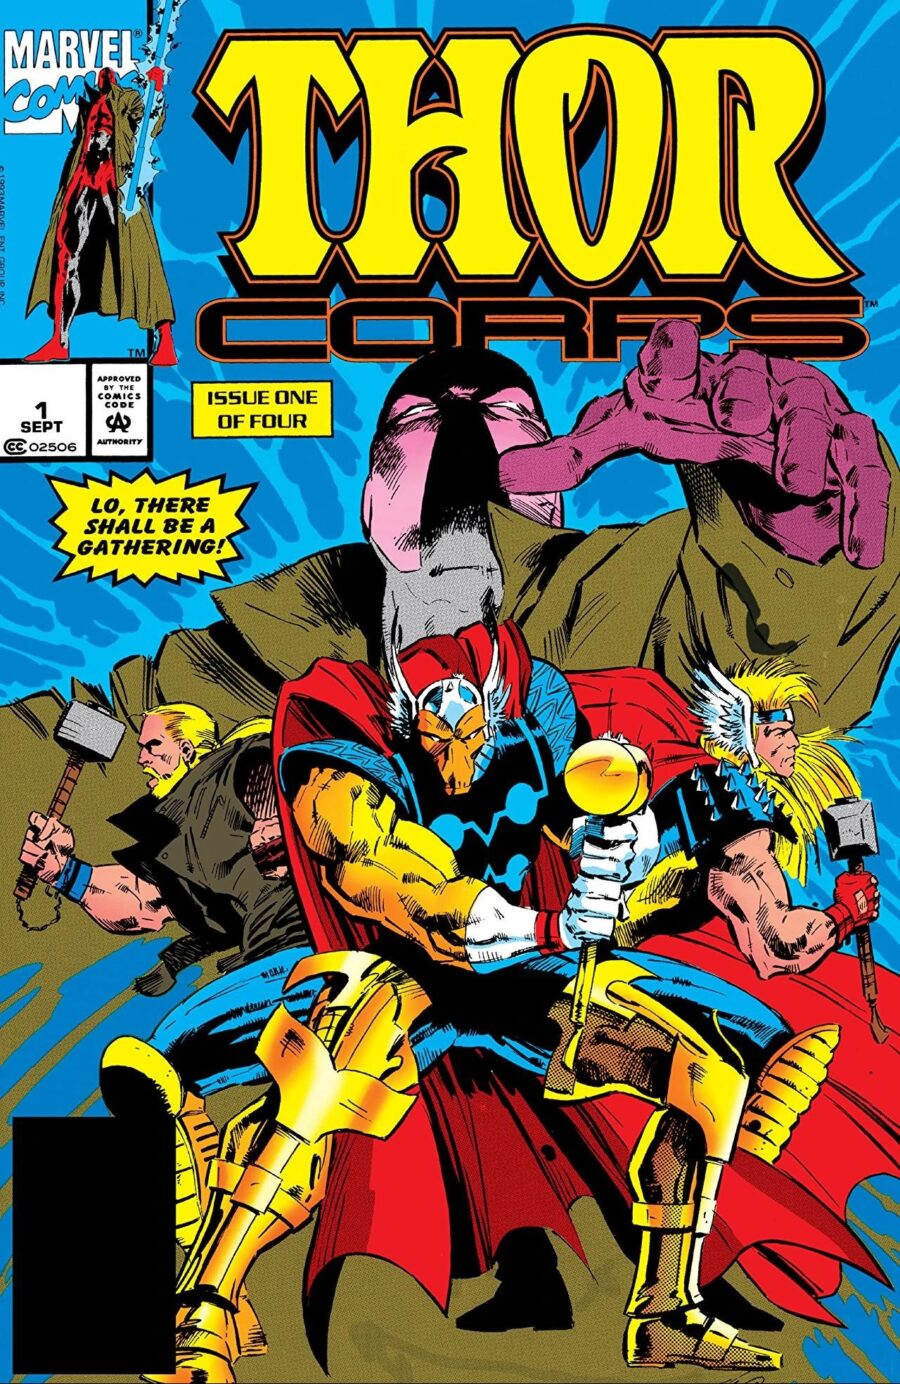 Thor Core